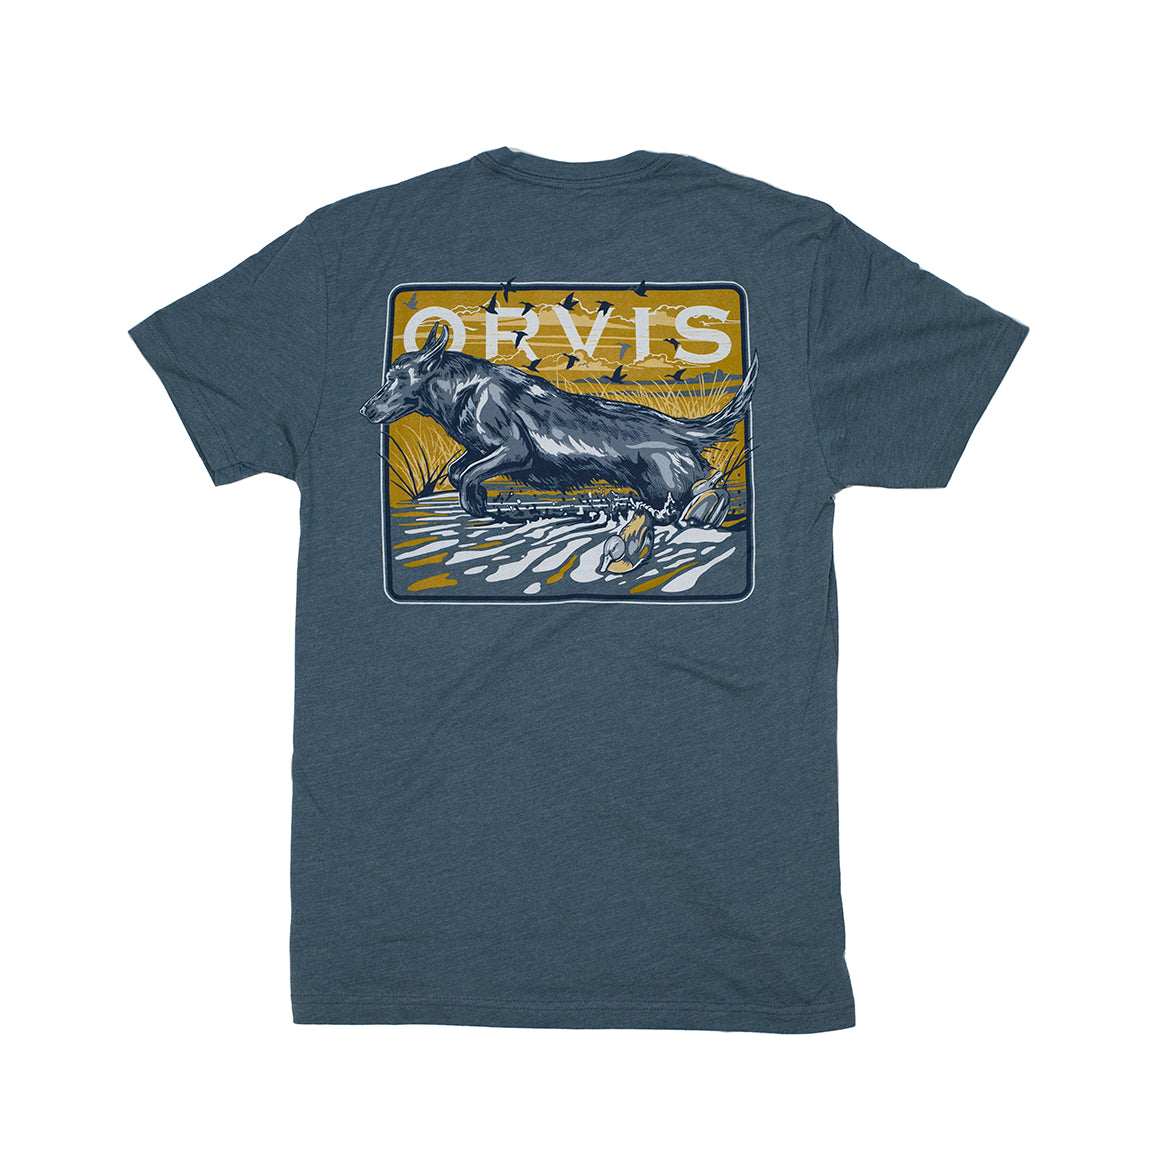 Orvis Duck Retriever SS Tee-Men's Clothing-Kevin's Fine Outdoor Gear & Apparel